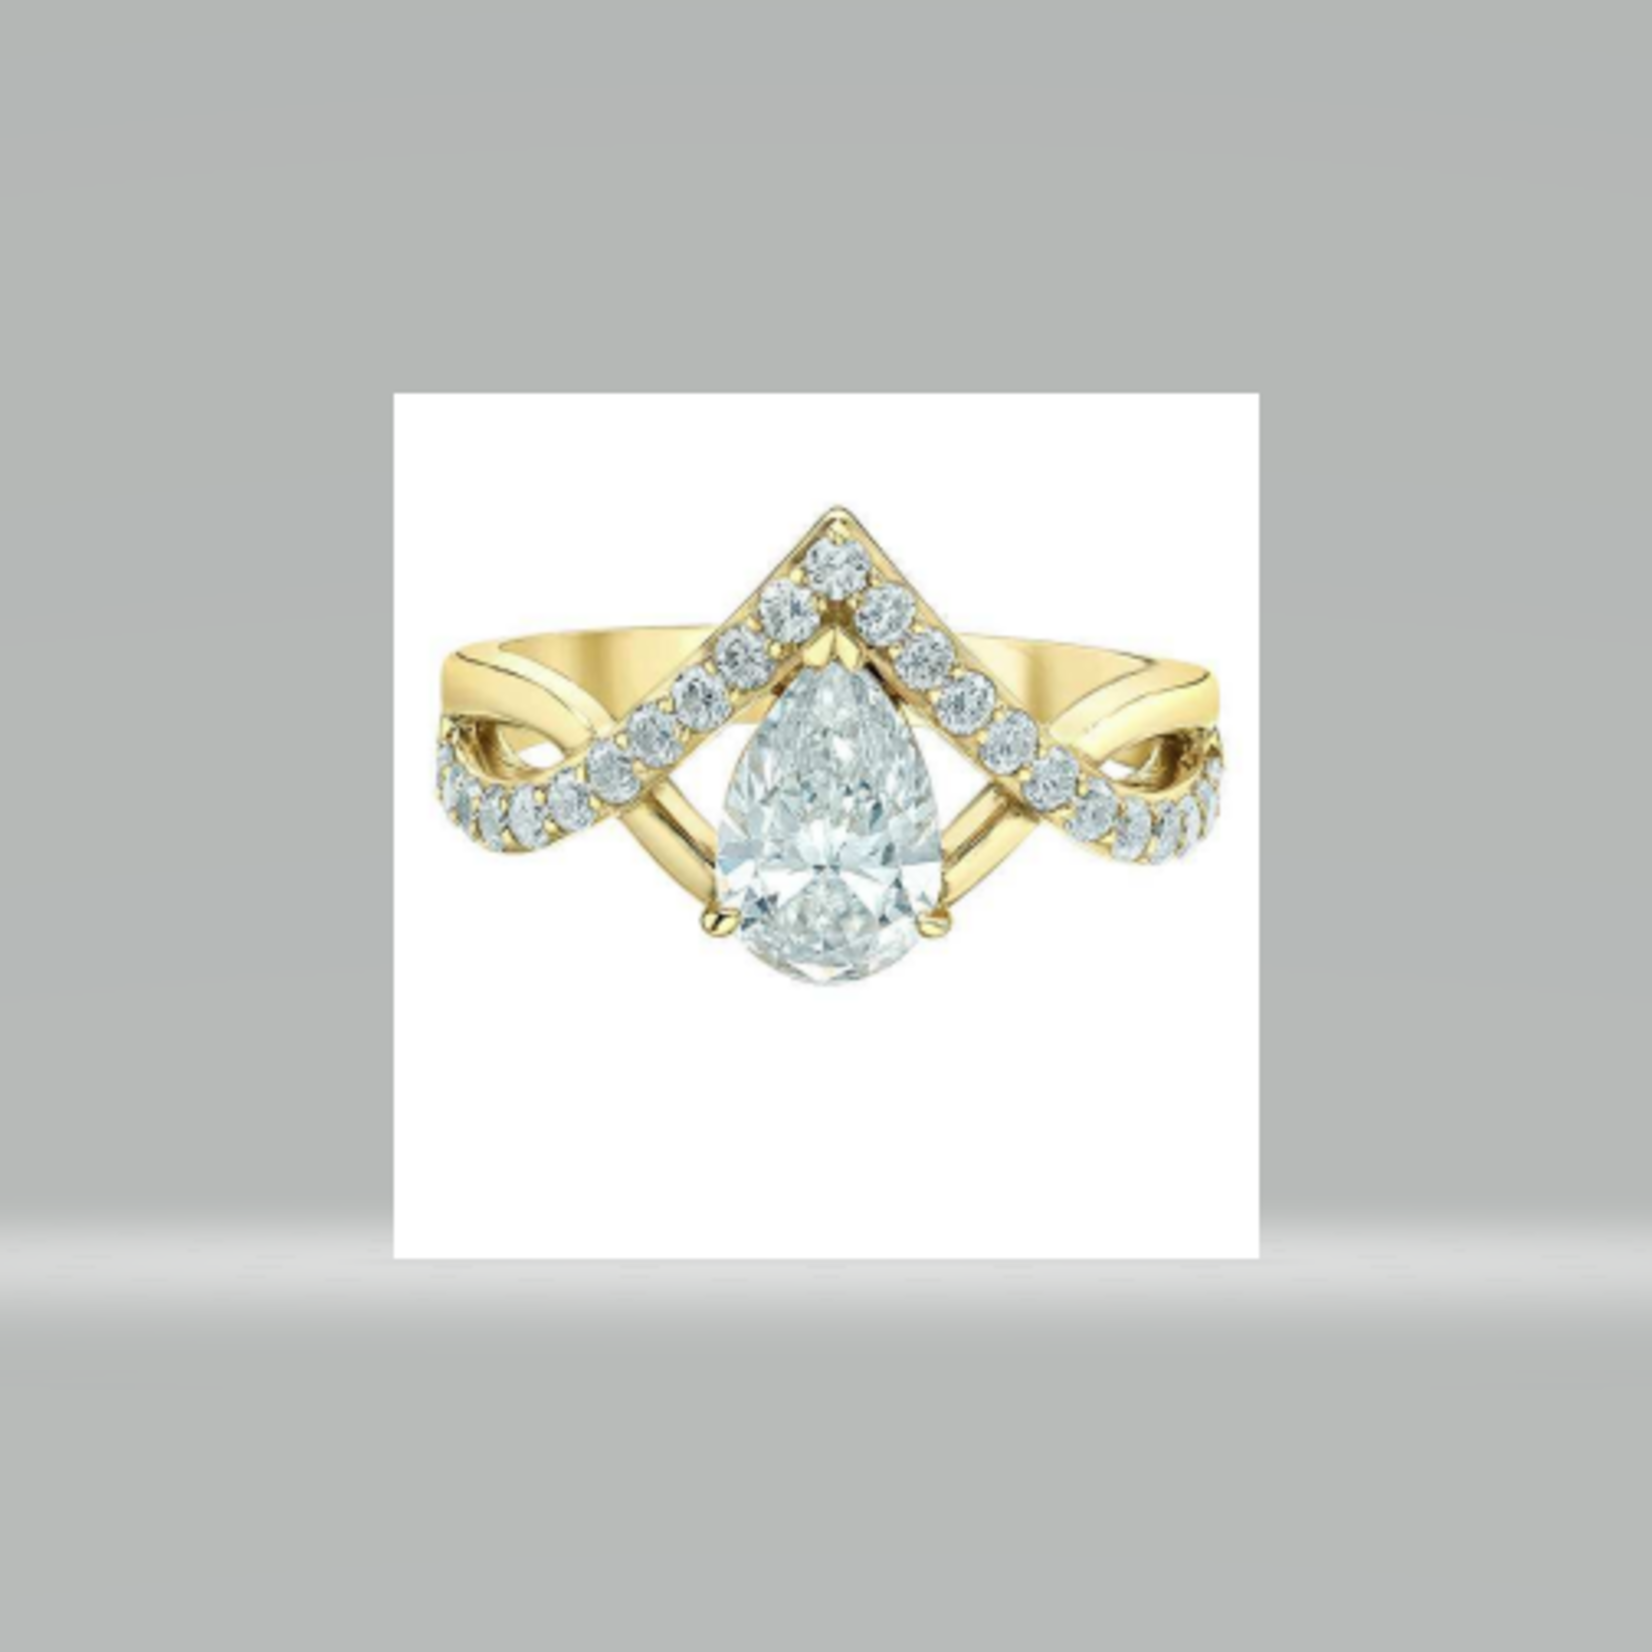 14K YG 1 RD#LGD008313 Pear Shape 1.02CT Diamond Ring